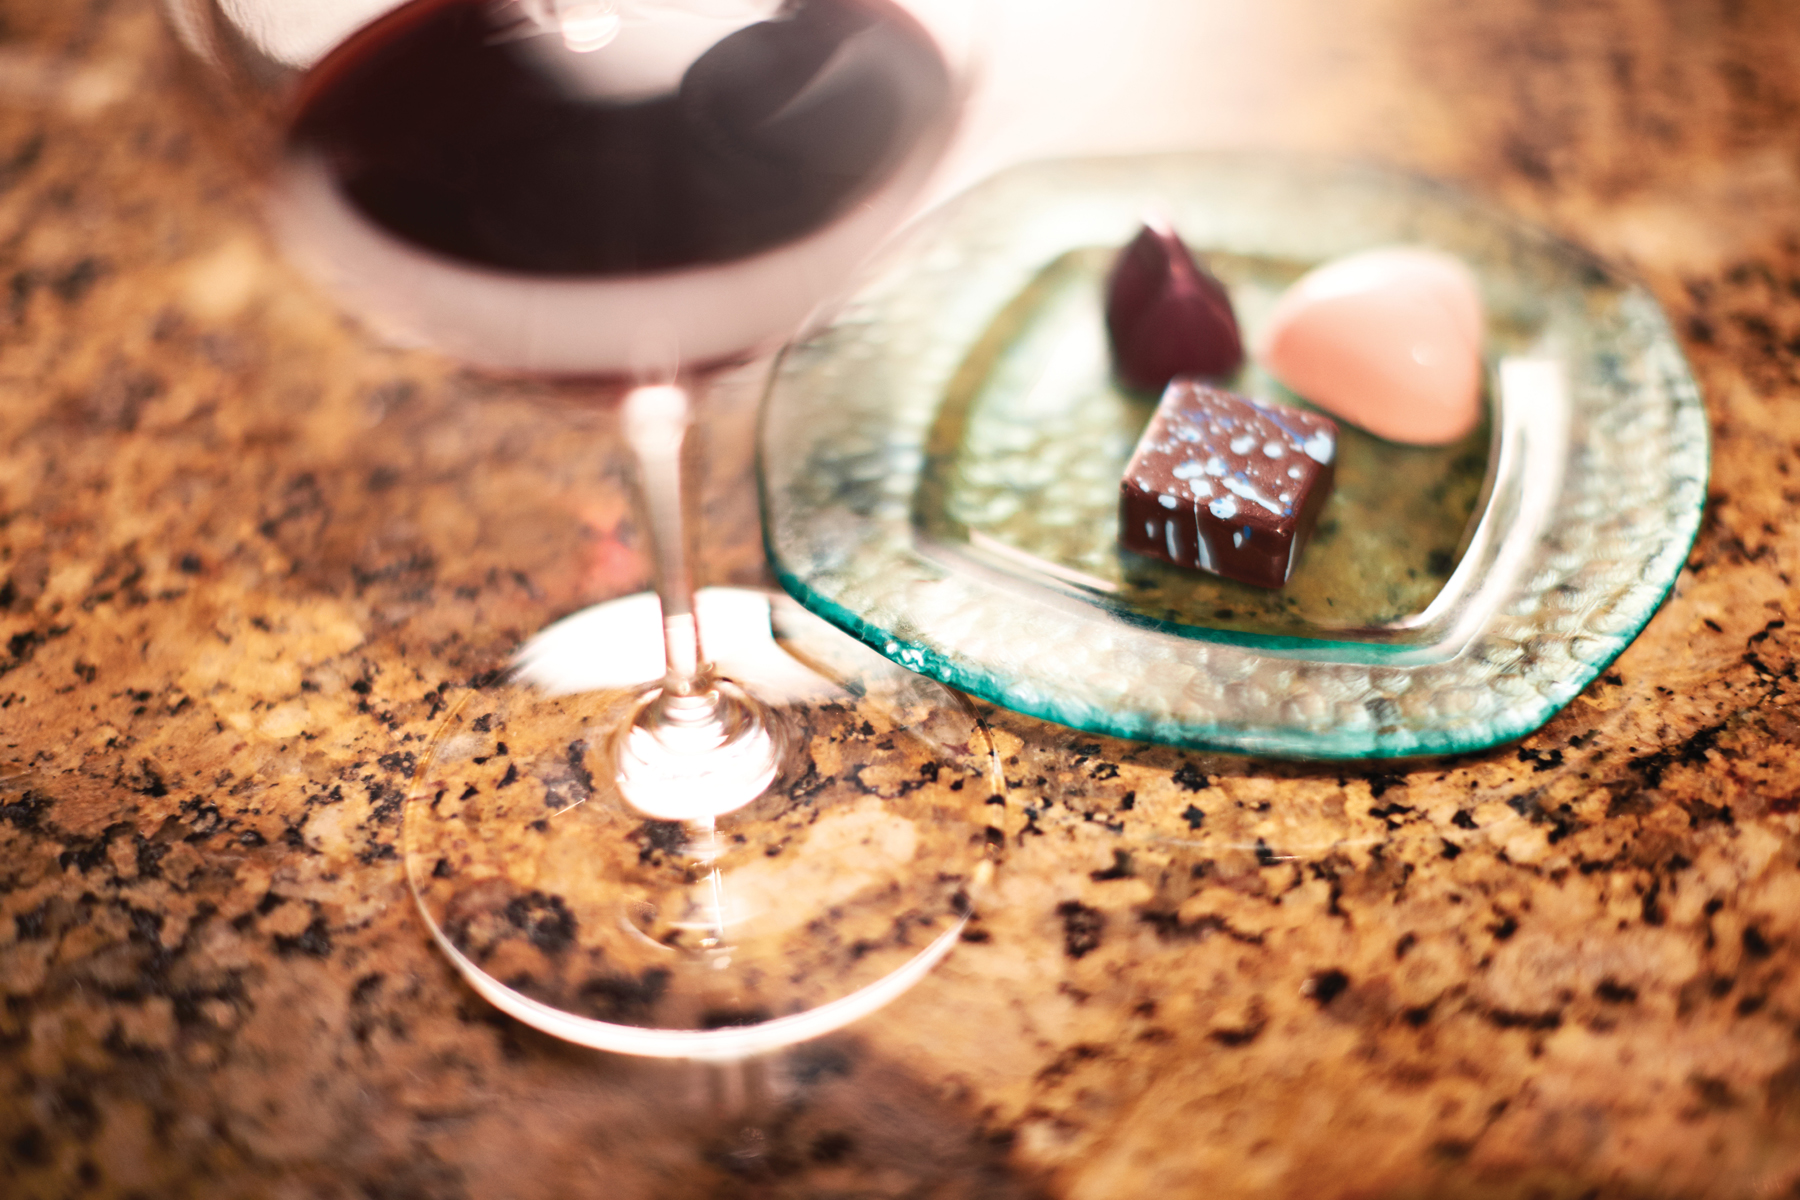 Wine and chocolate pairing wine tasting on Princess cruise ship (source: Princess Cruises)